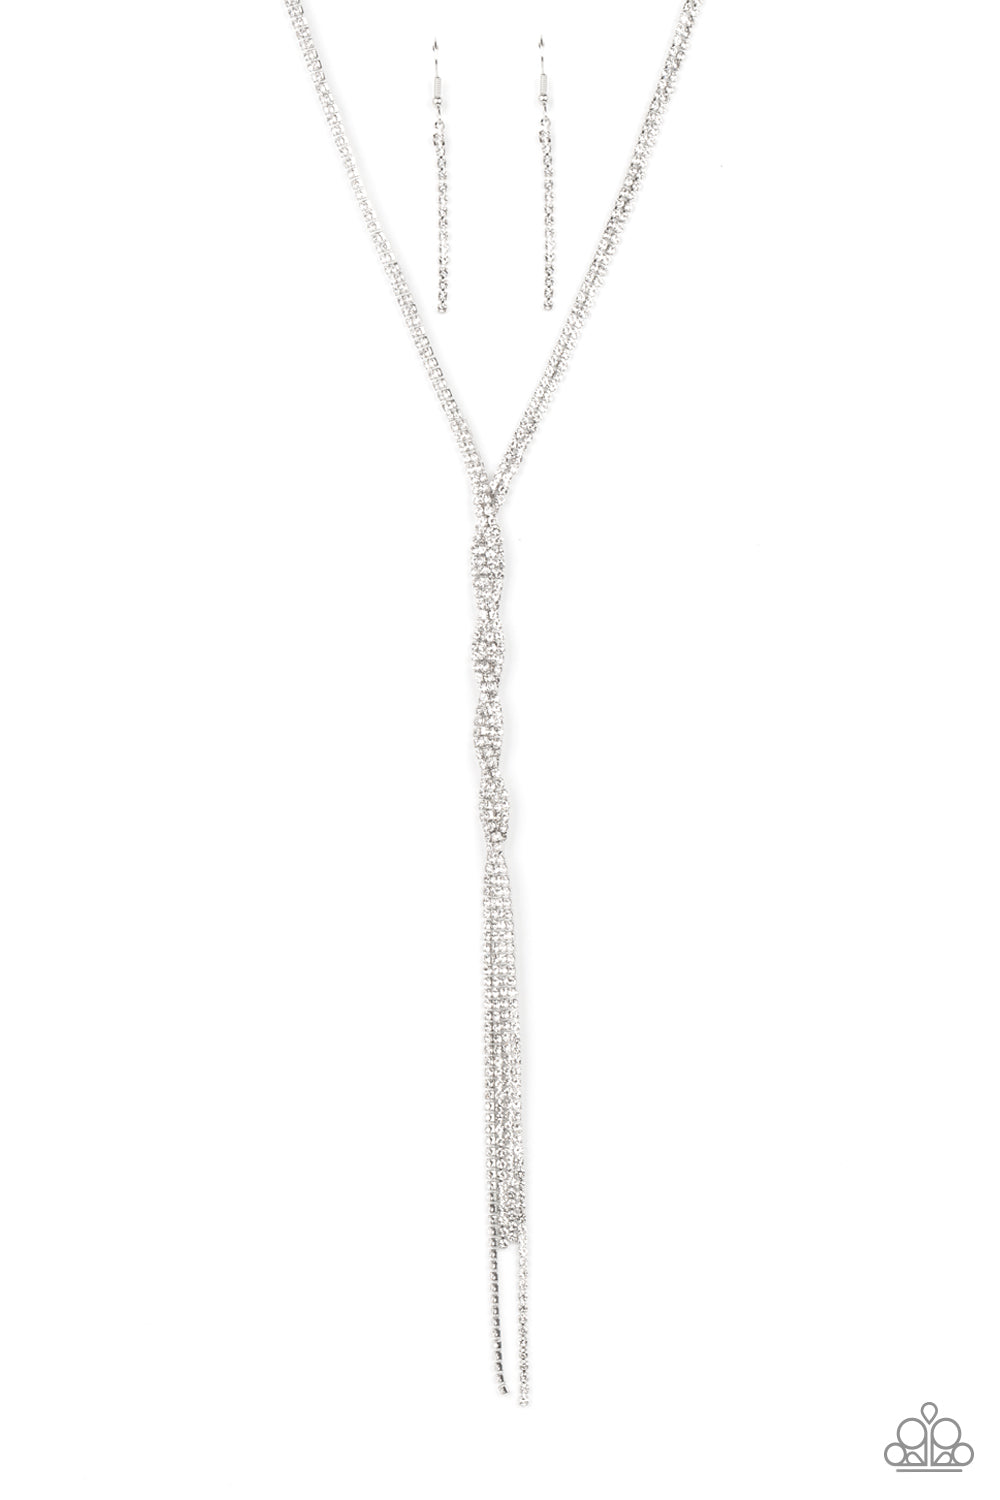 Paparazzi Necklaces - Impressively Icy - White